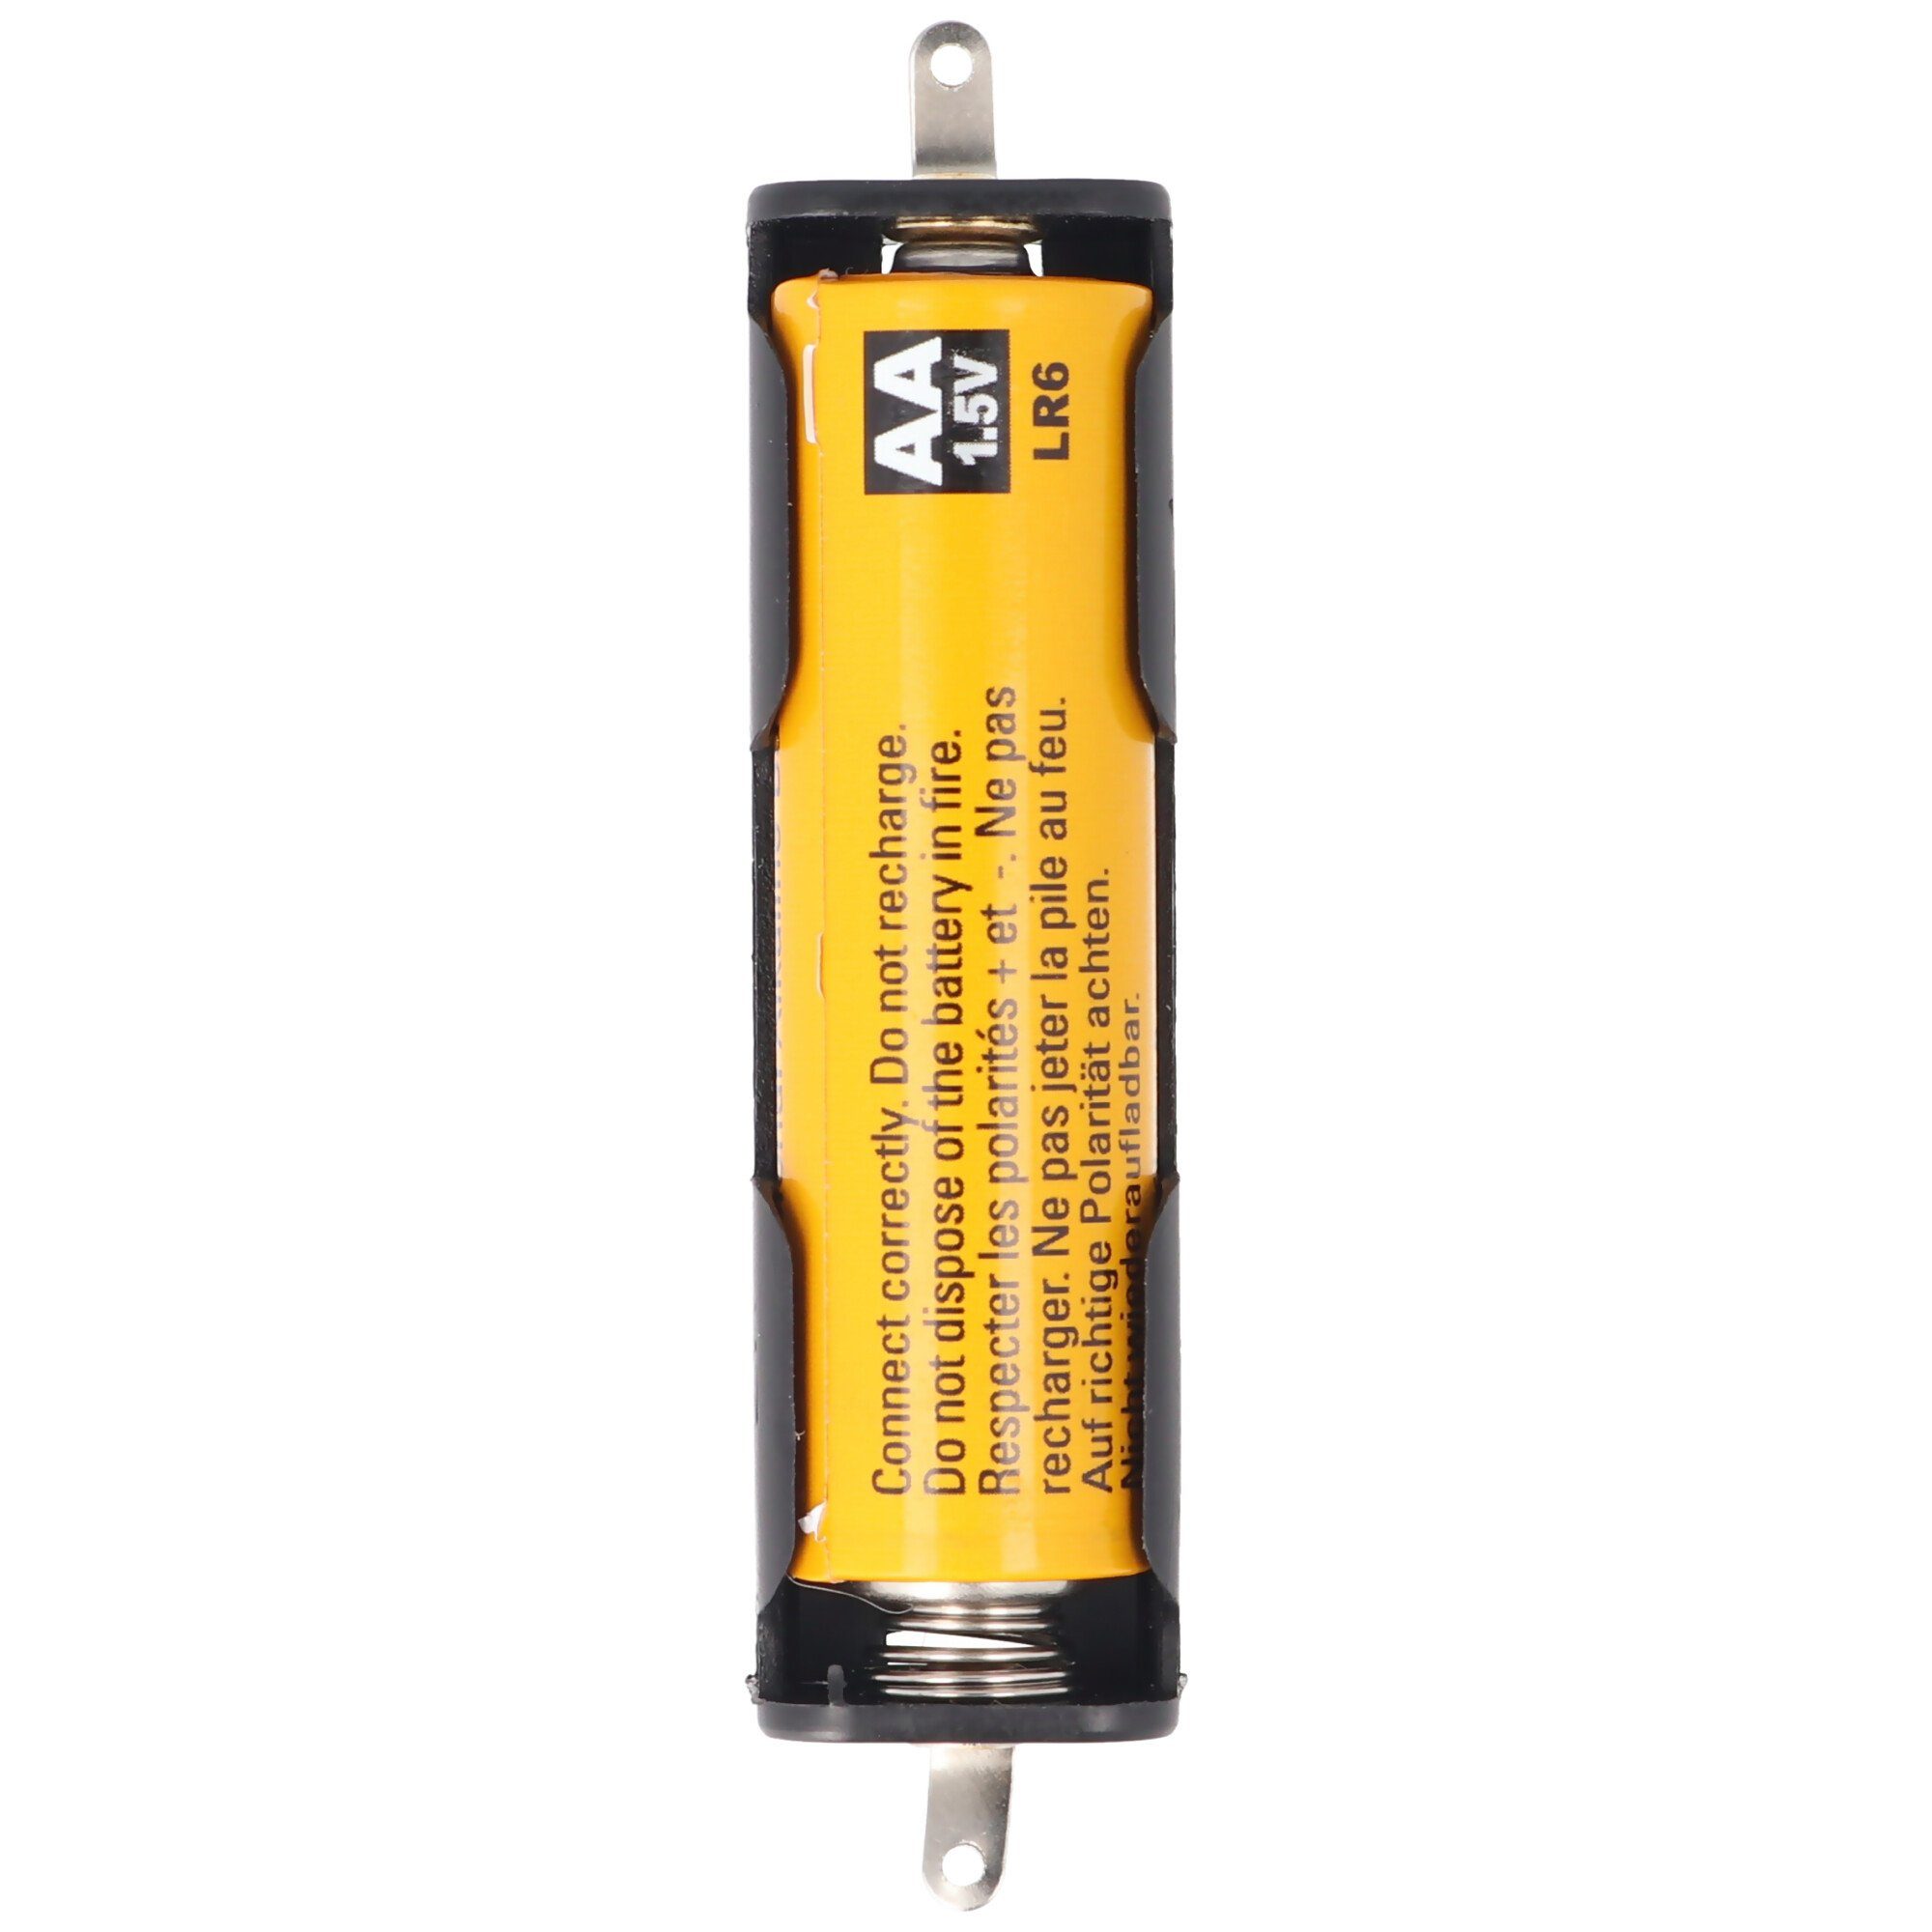 AccuCell AccuCell Batteriehalter für 1x Mignon AA Batterie, LR6 Batterie Akku